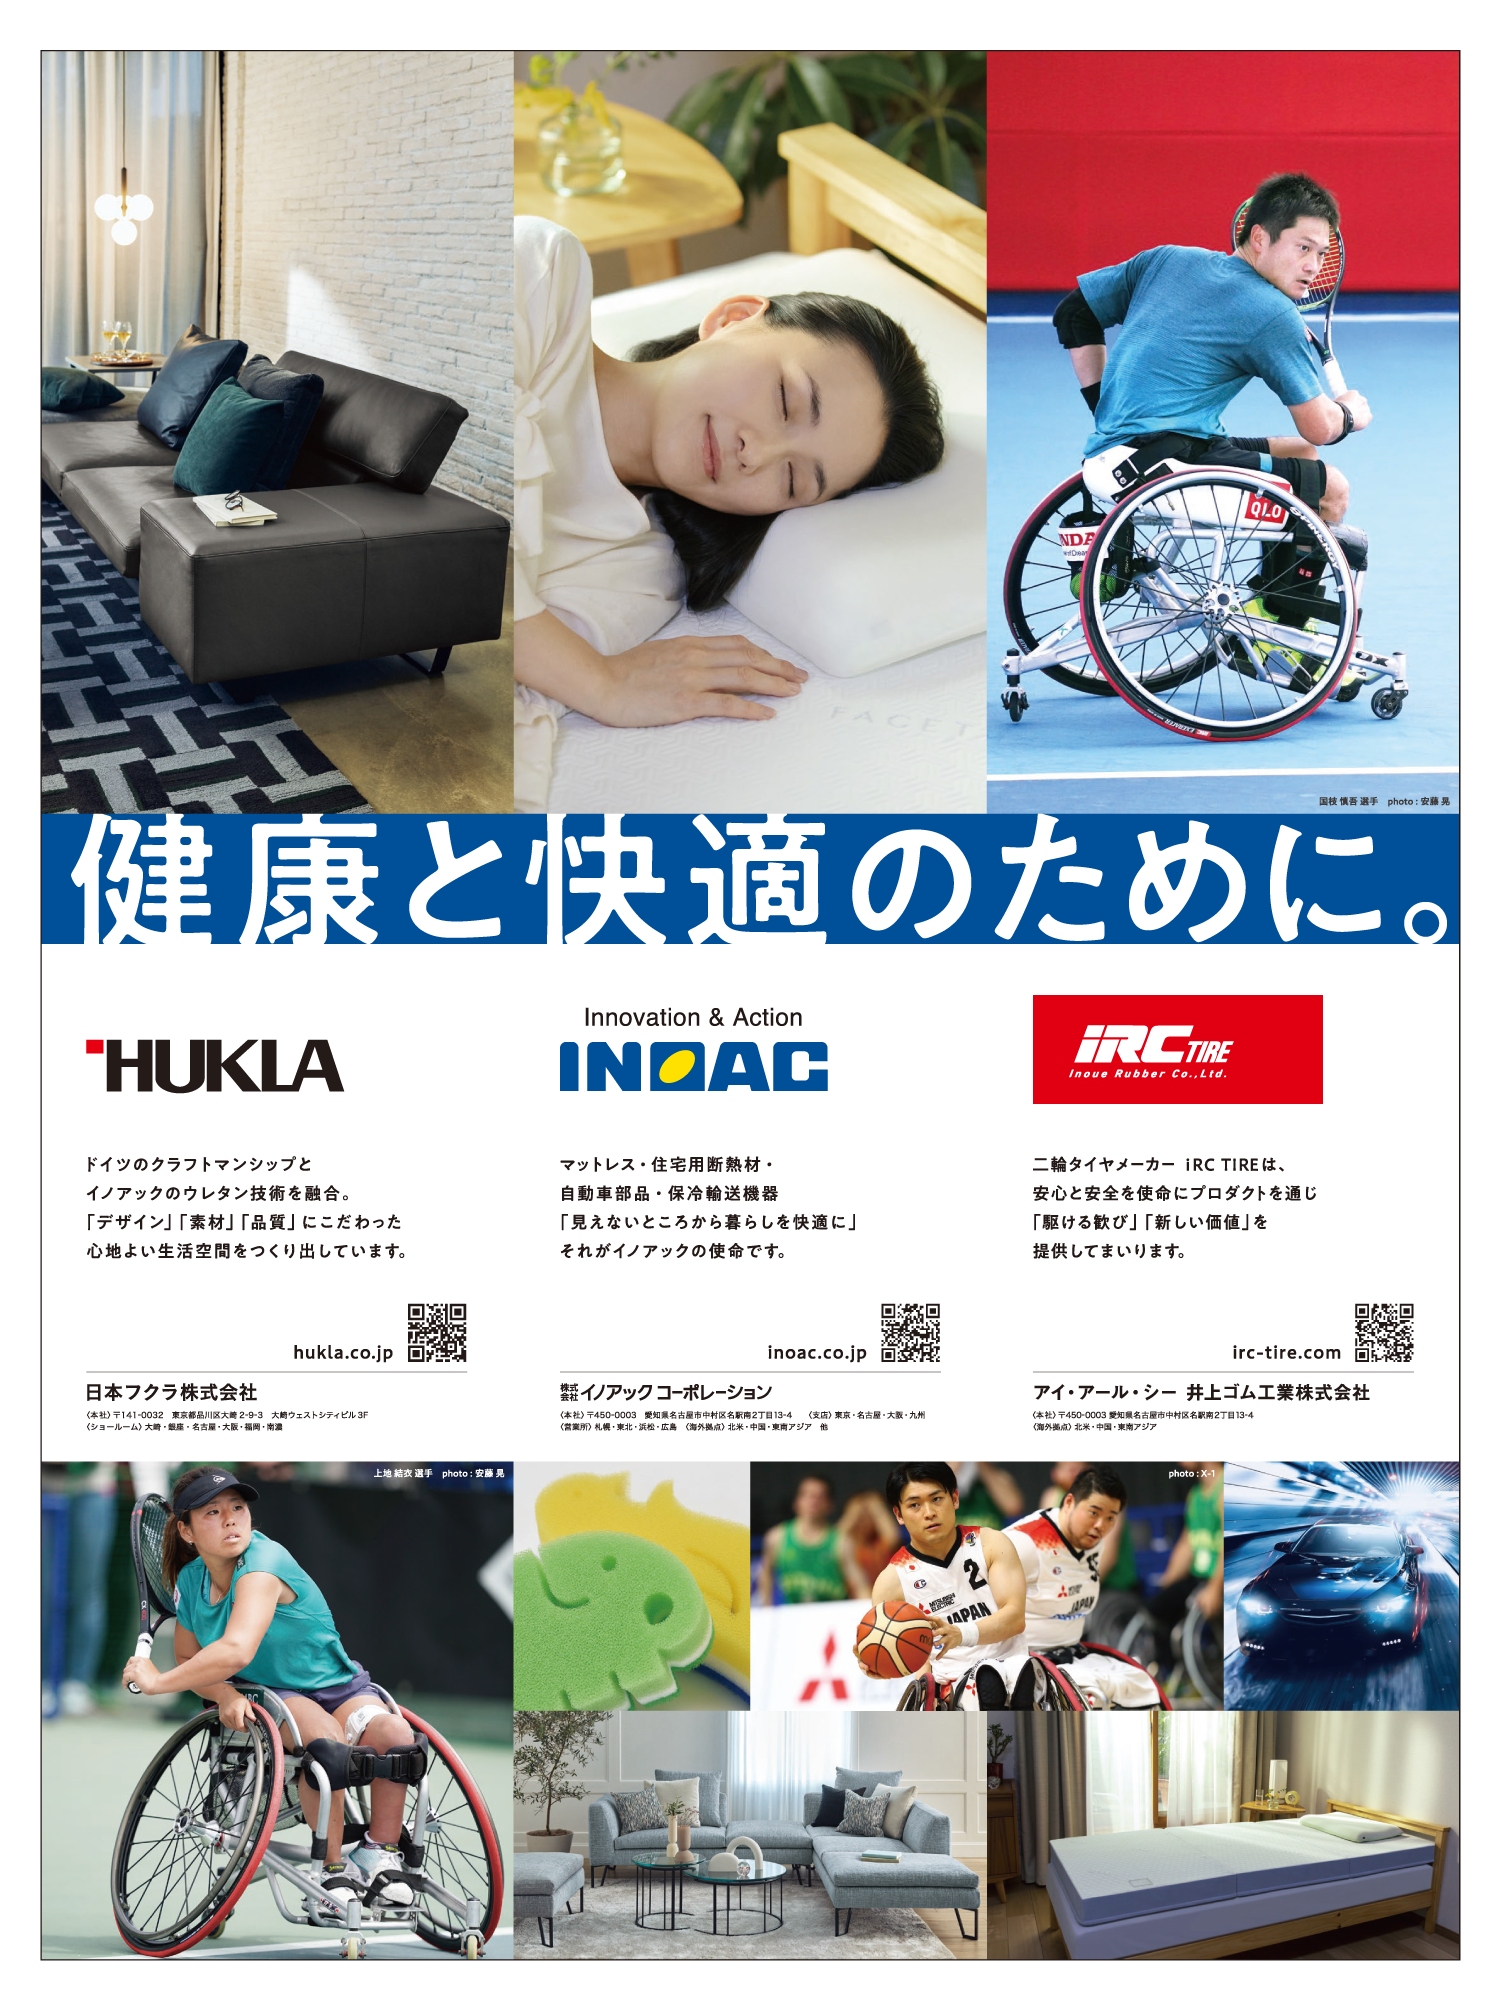 2021年12月30日付-中日新聞-HUKLA_INOAC_iRC広告.png